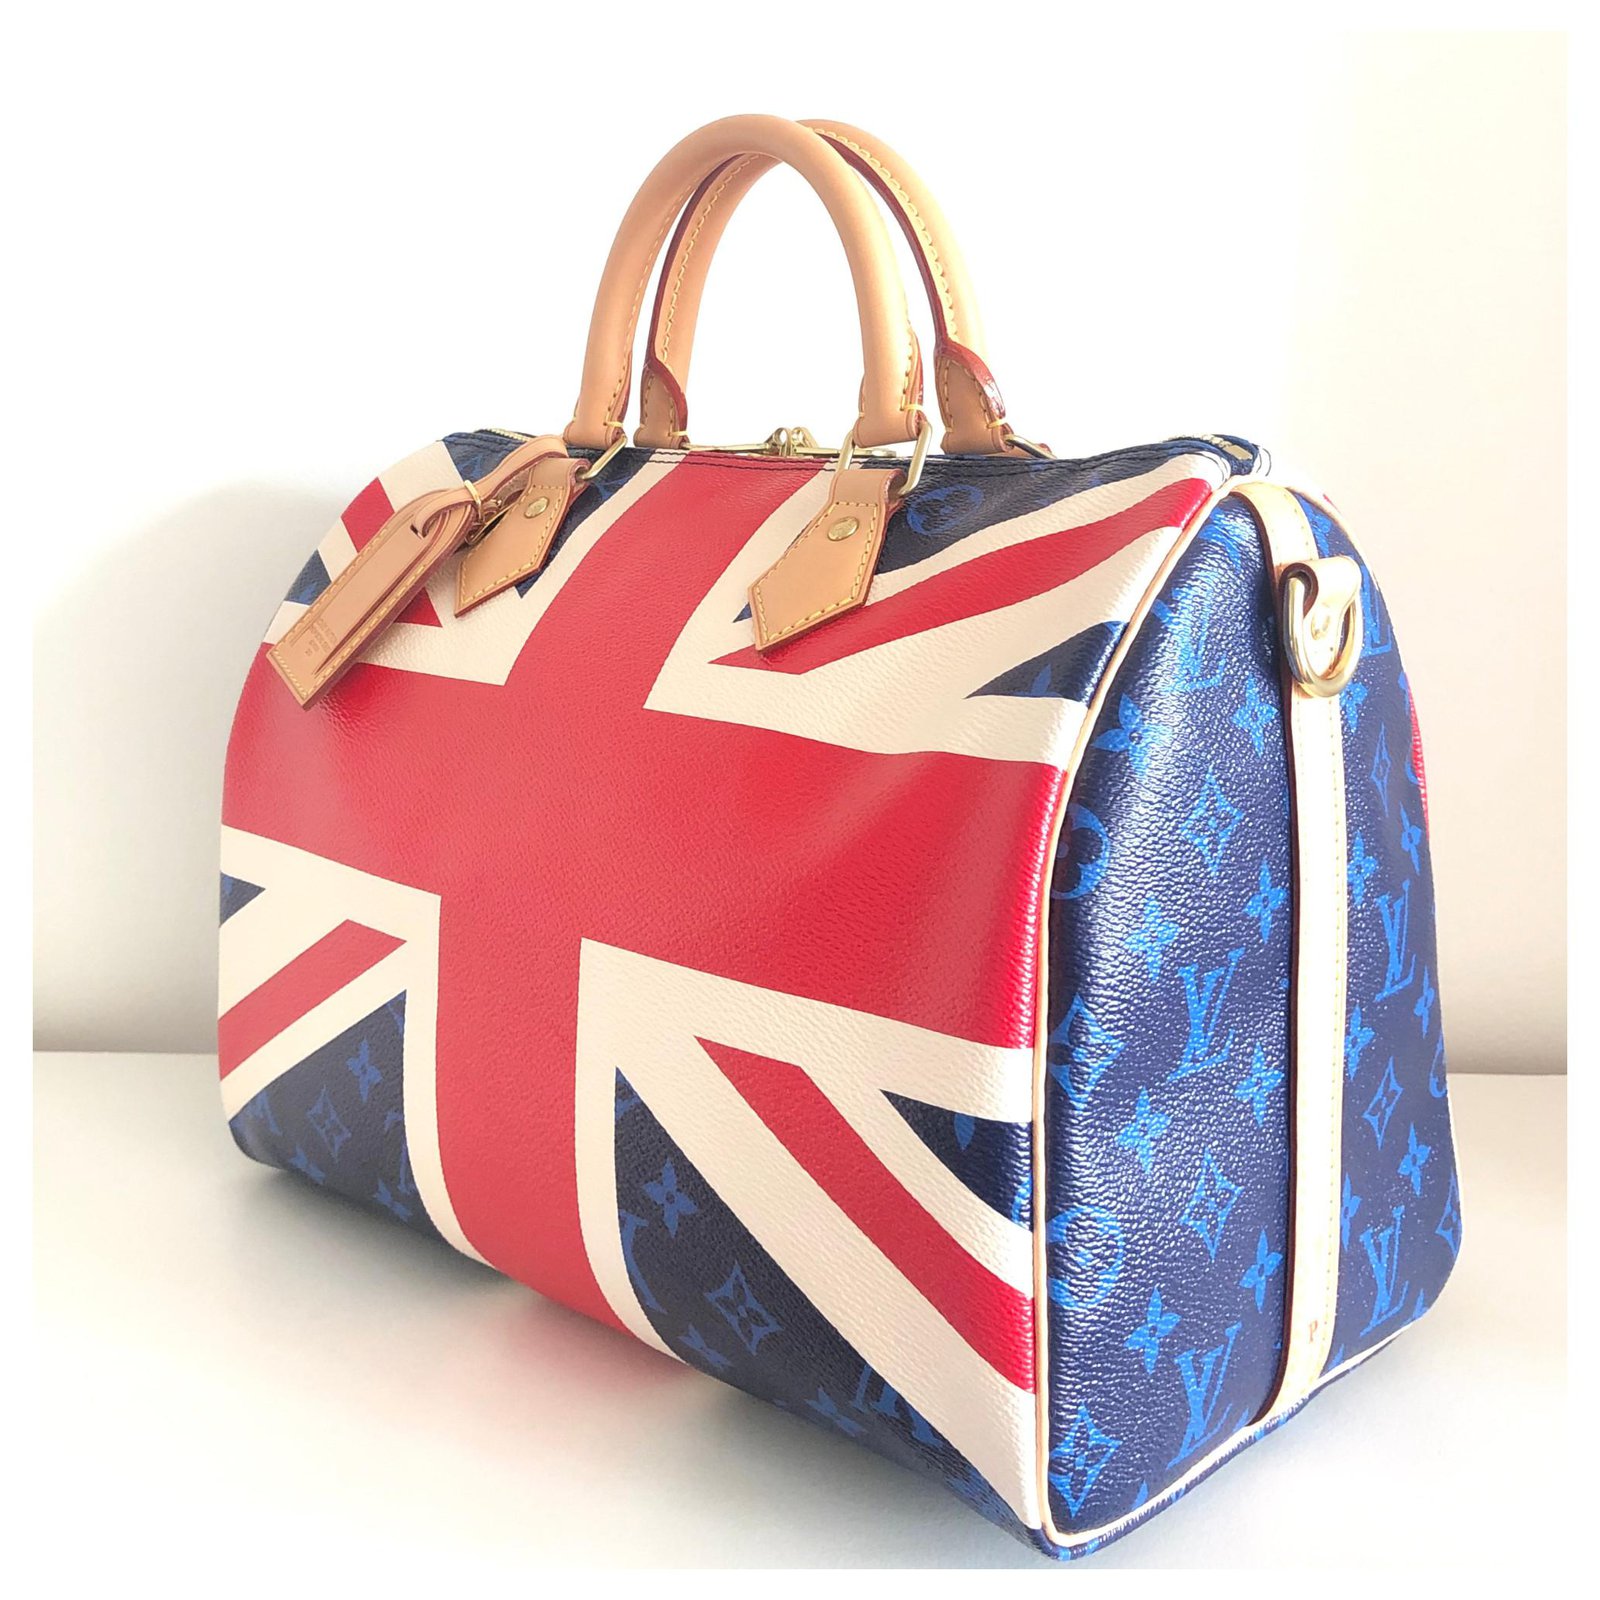 Rare Louis Vuitton bag created to celebrate royal wedding to be